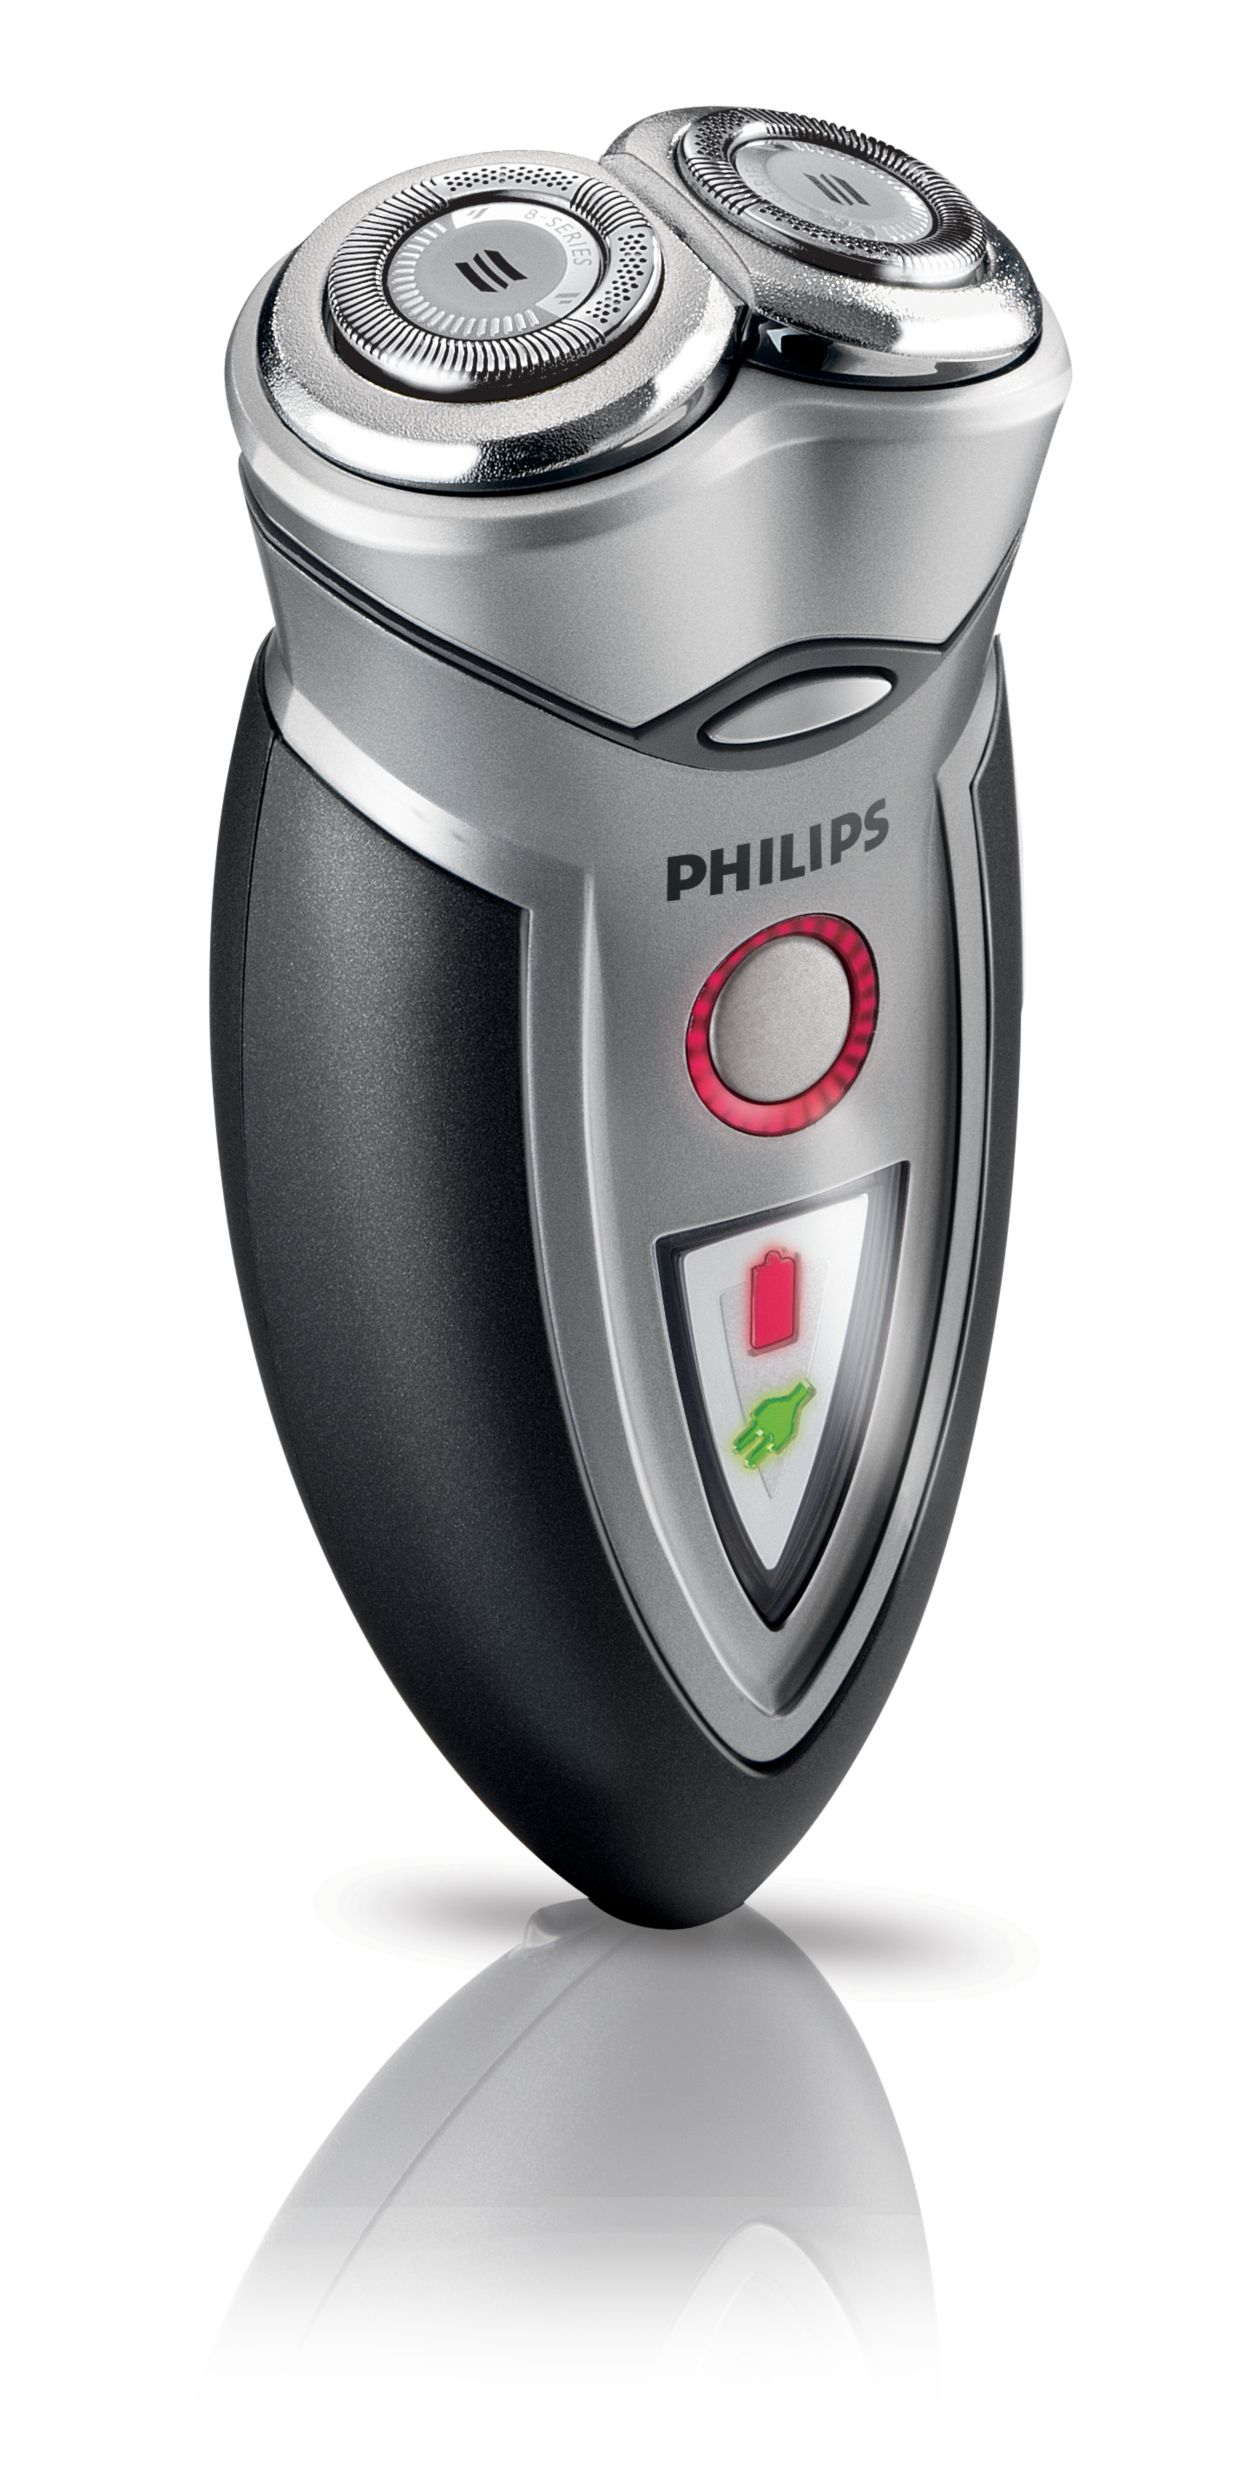 Philips 6000 series. Philips hq 9020. Электробритва Филипс 6000. Электробритва Филипс hq 6095. Бритва Филипс hq 6906.